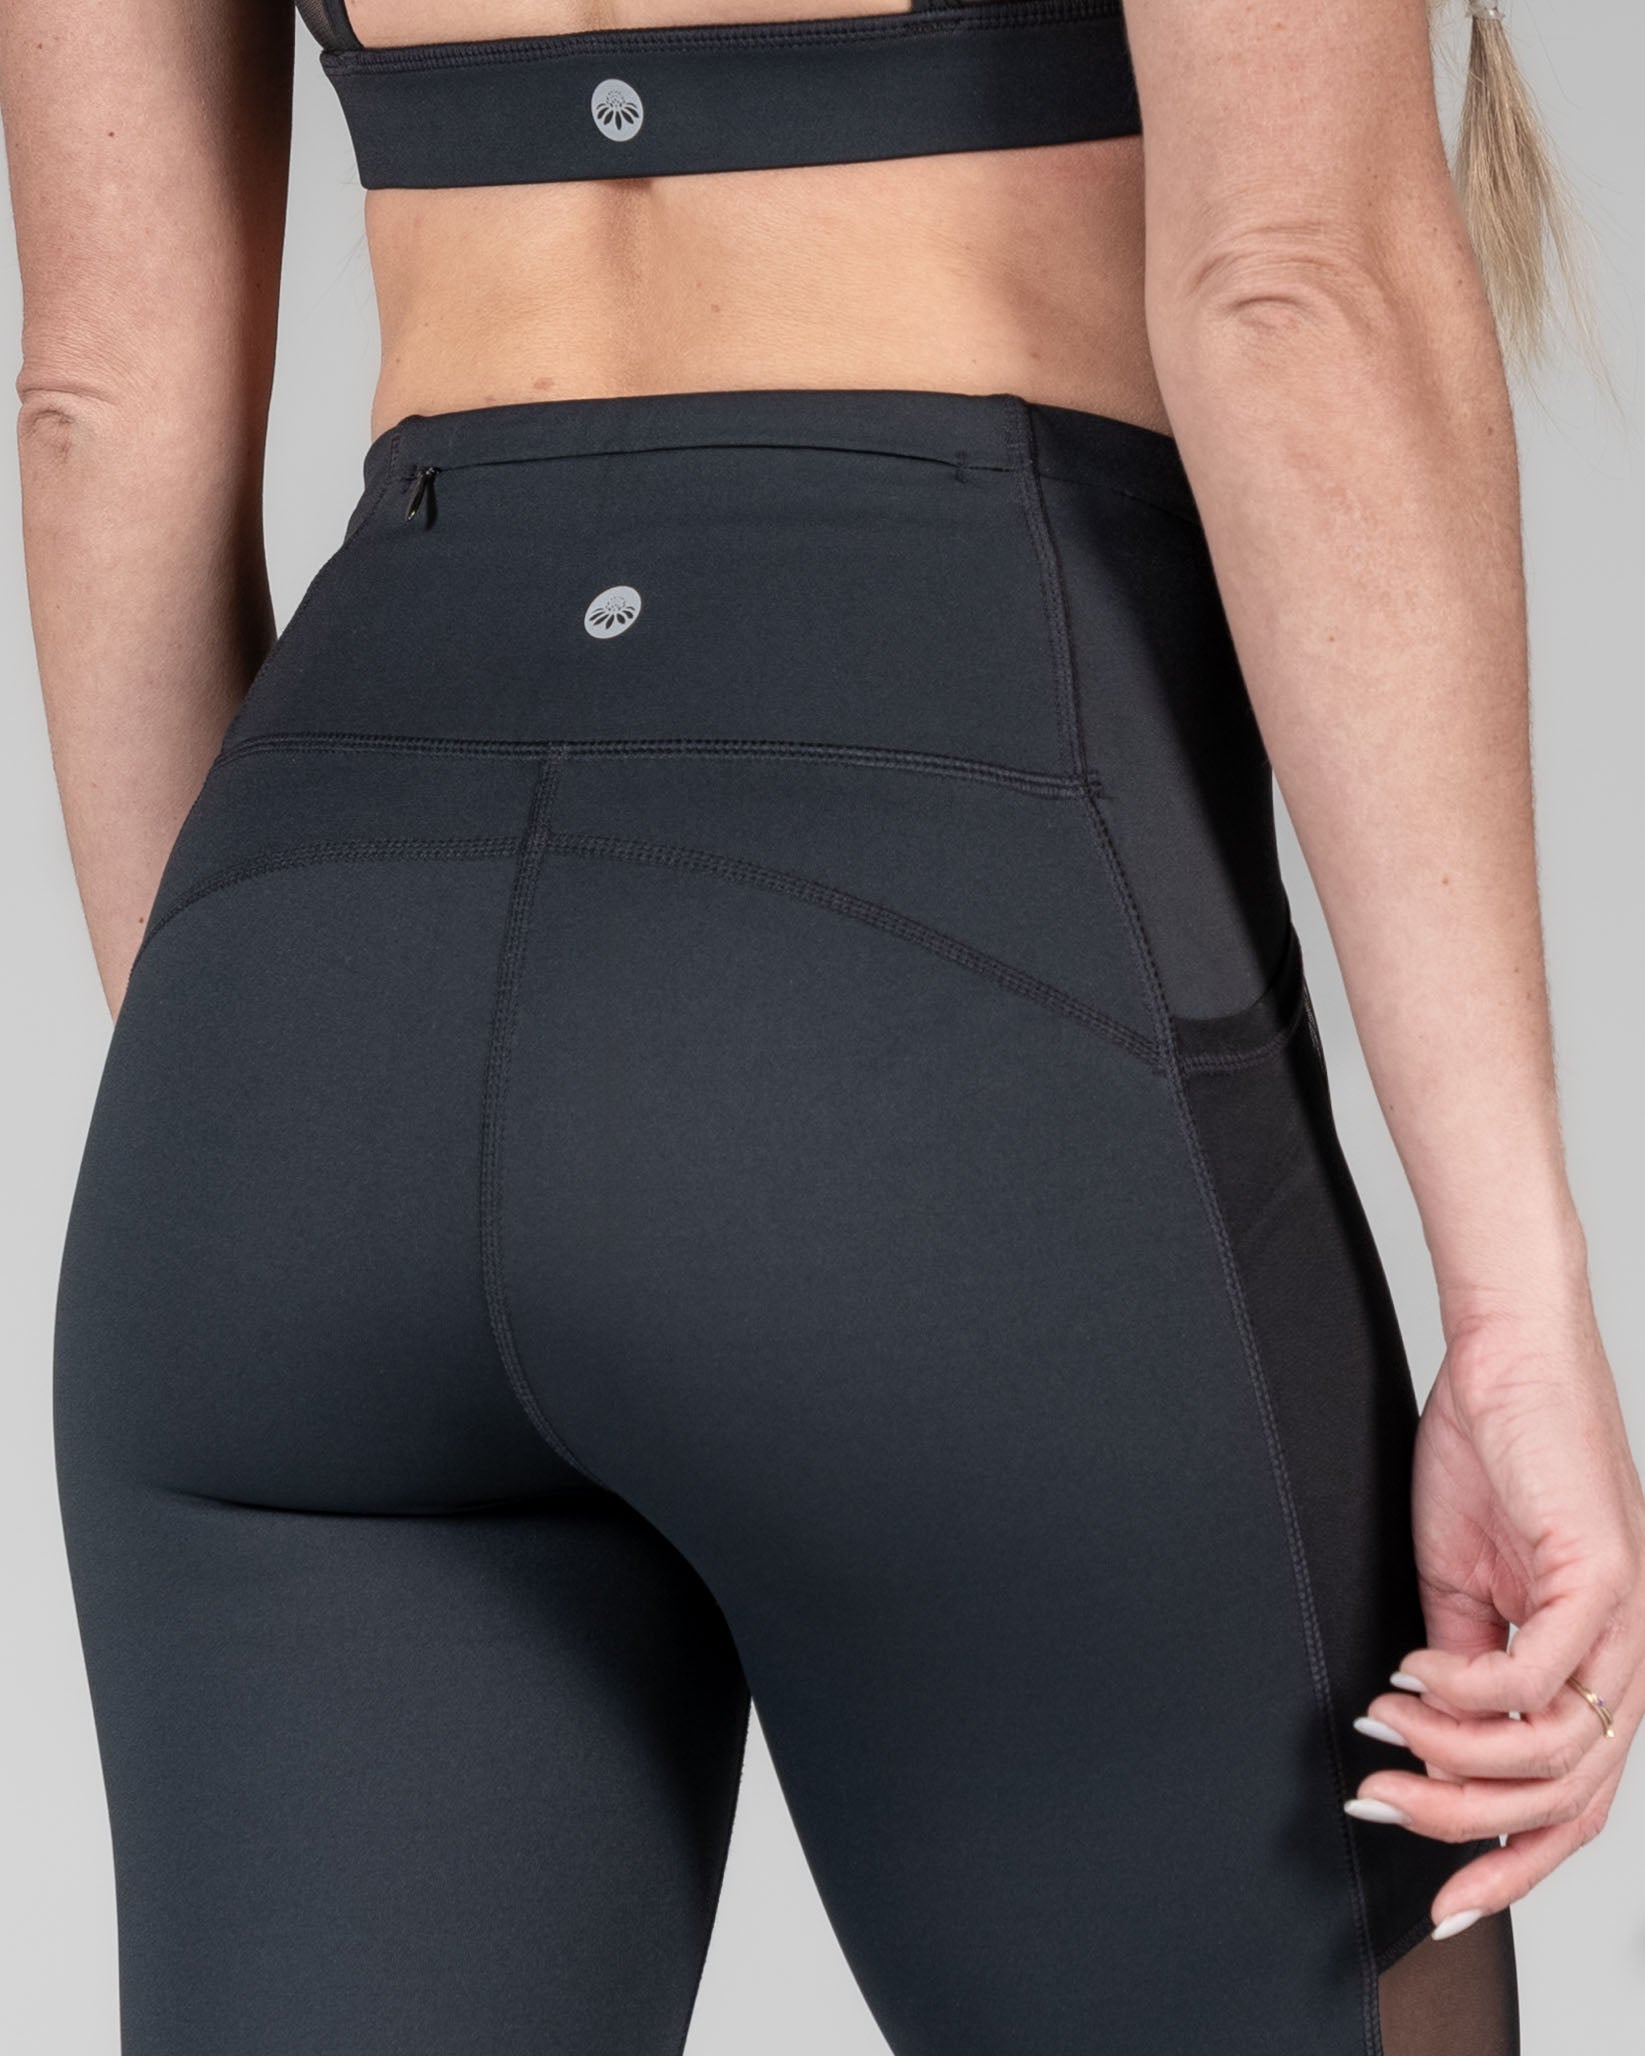 Lole Panna Multi Textured Legging BLACK Gray Mesh Detail Sz XS Athleisure  Yoga